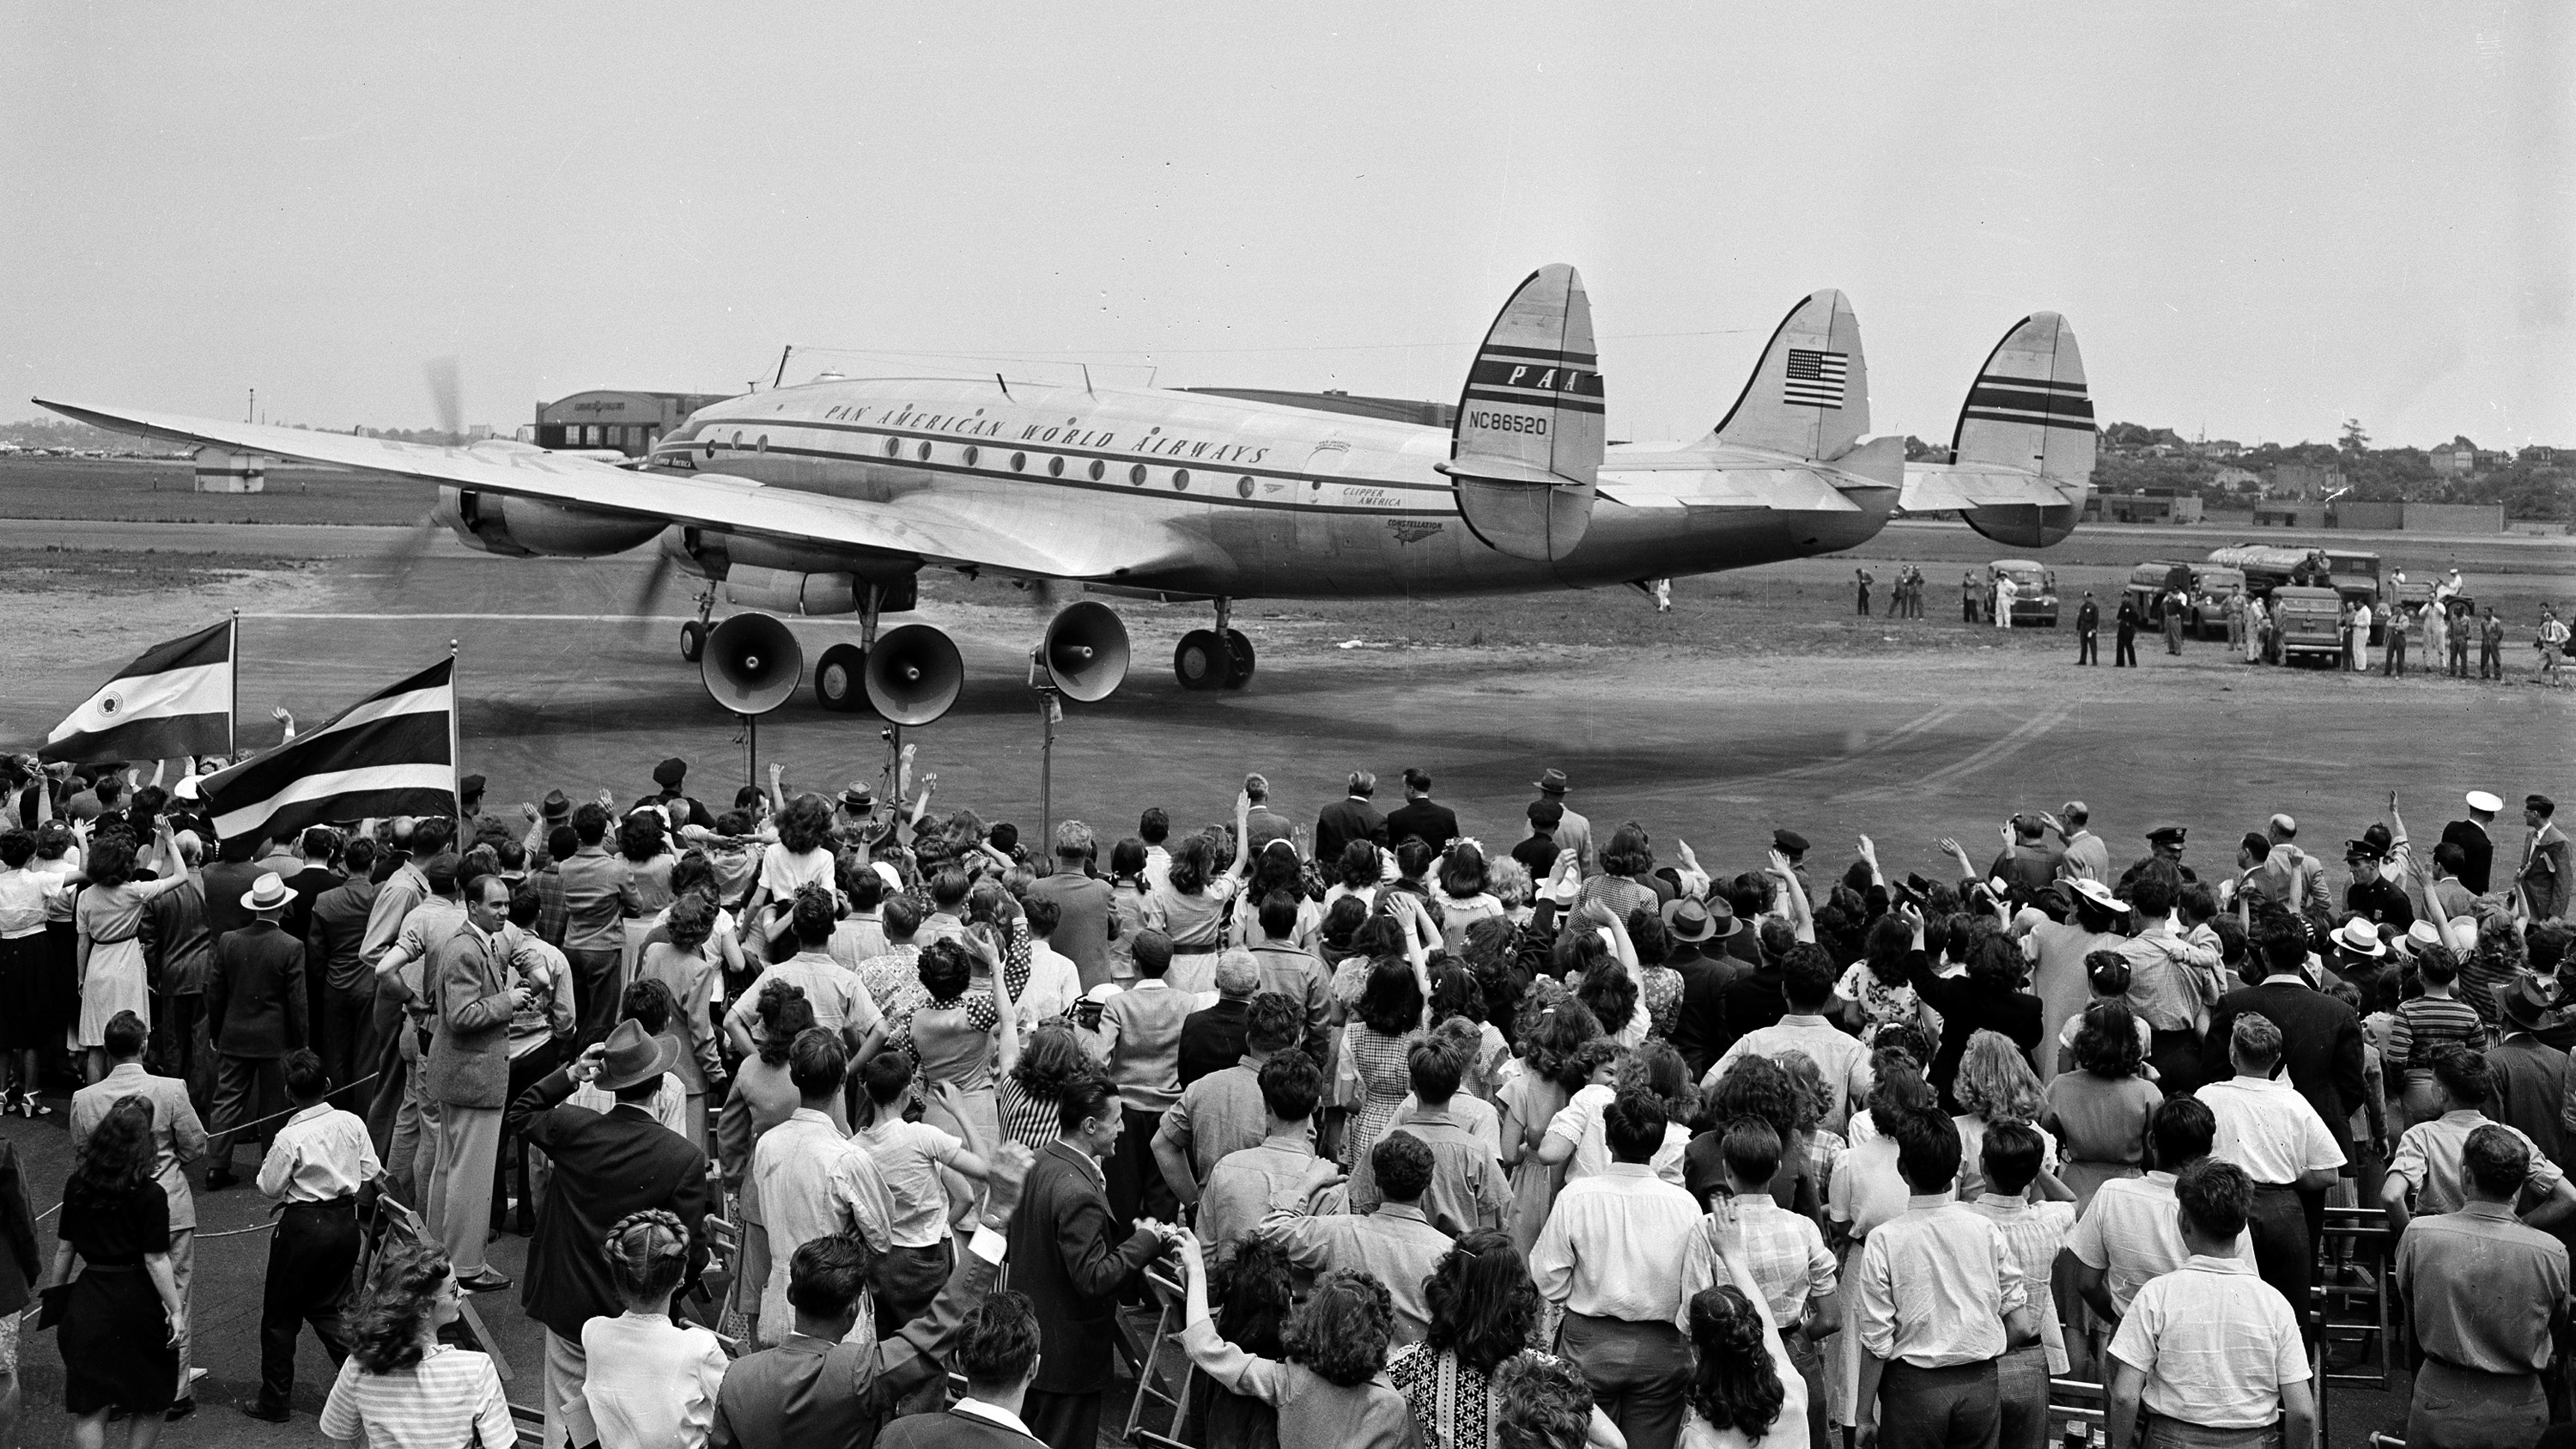 Pan Am: The trailblazing airline that changed international travel | CNN  Travel